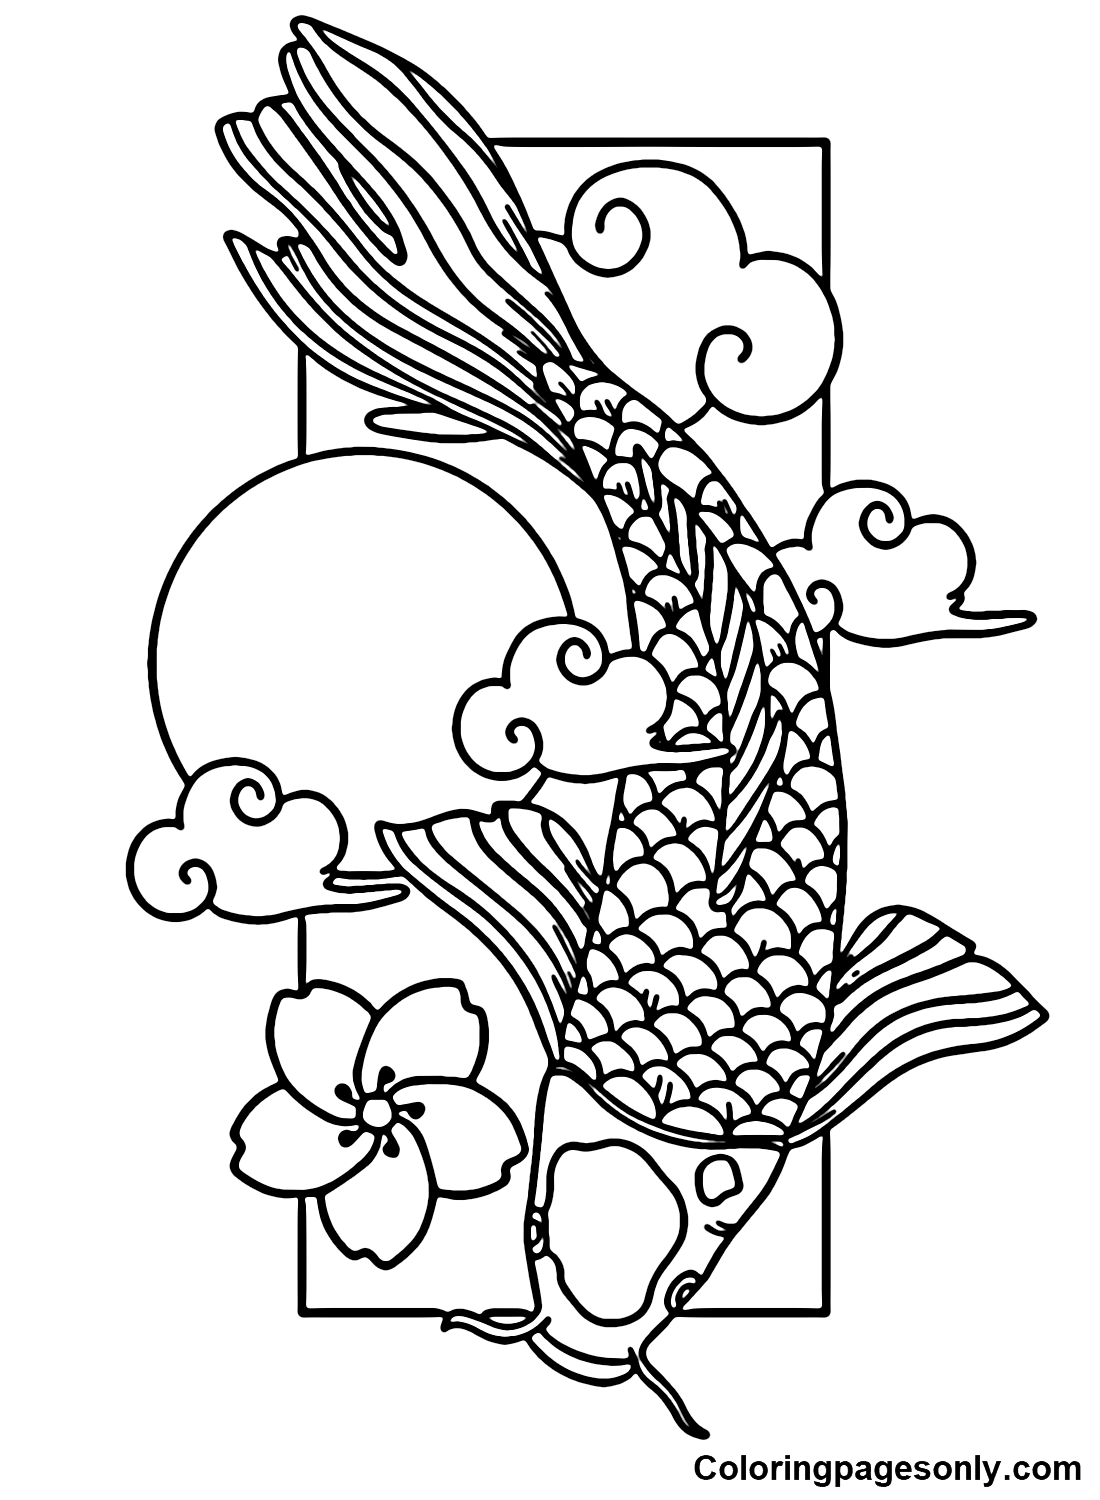 Printable Koi Fish Coloring Pages